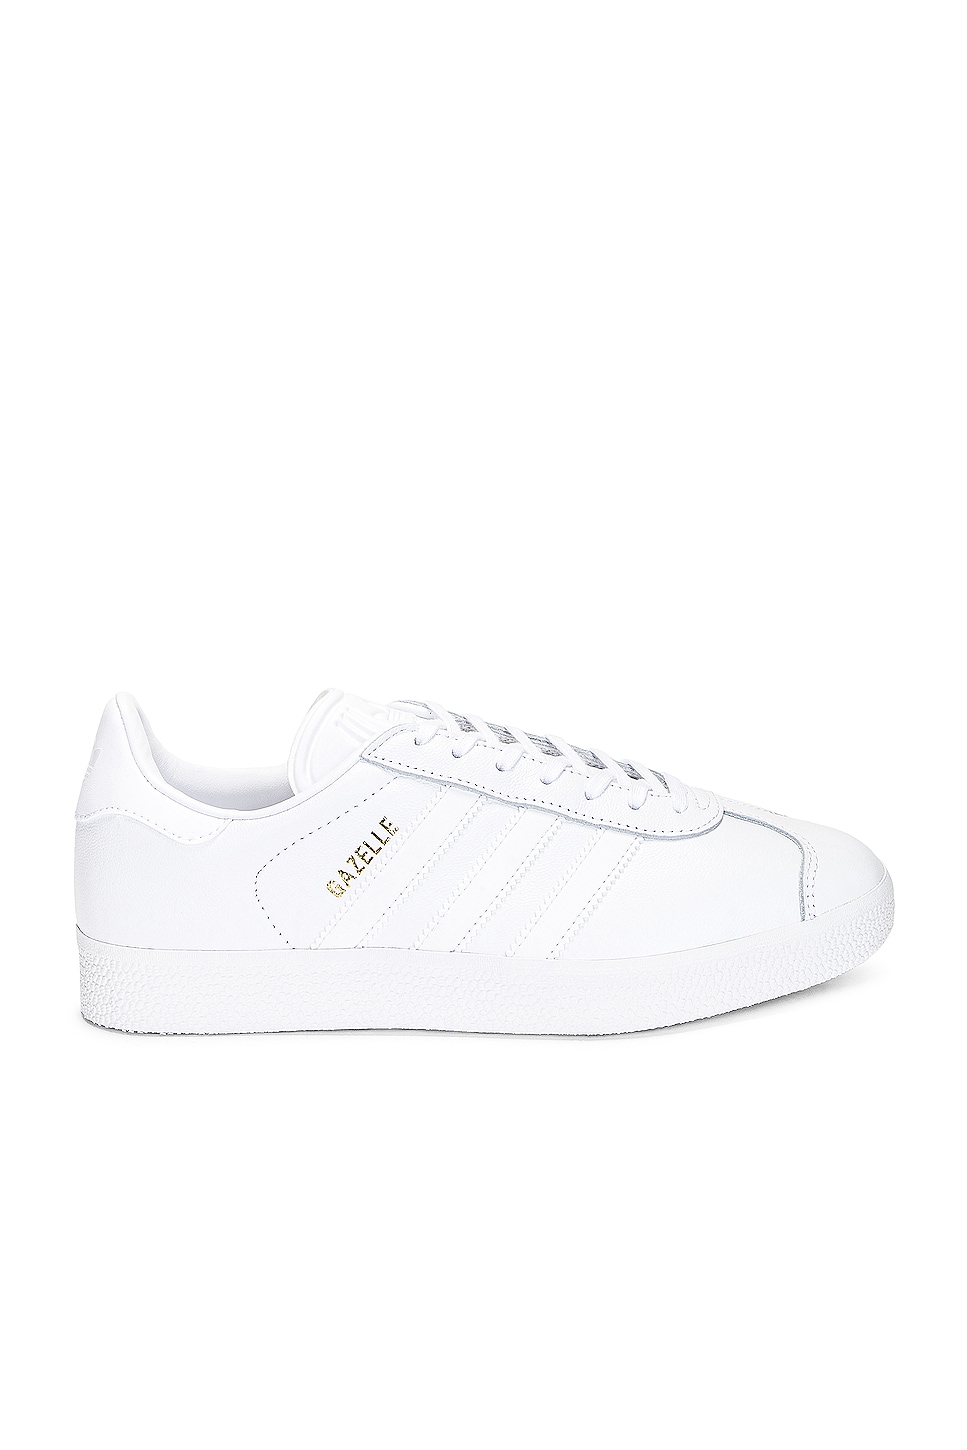 Image 1 of adidas Originals Gazelle Sneaker in White & Gold Metallic